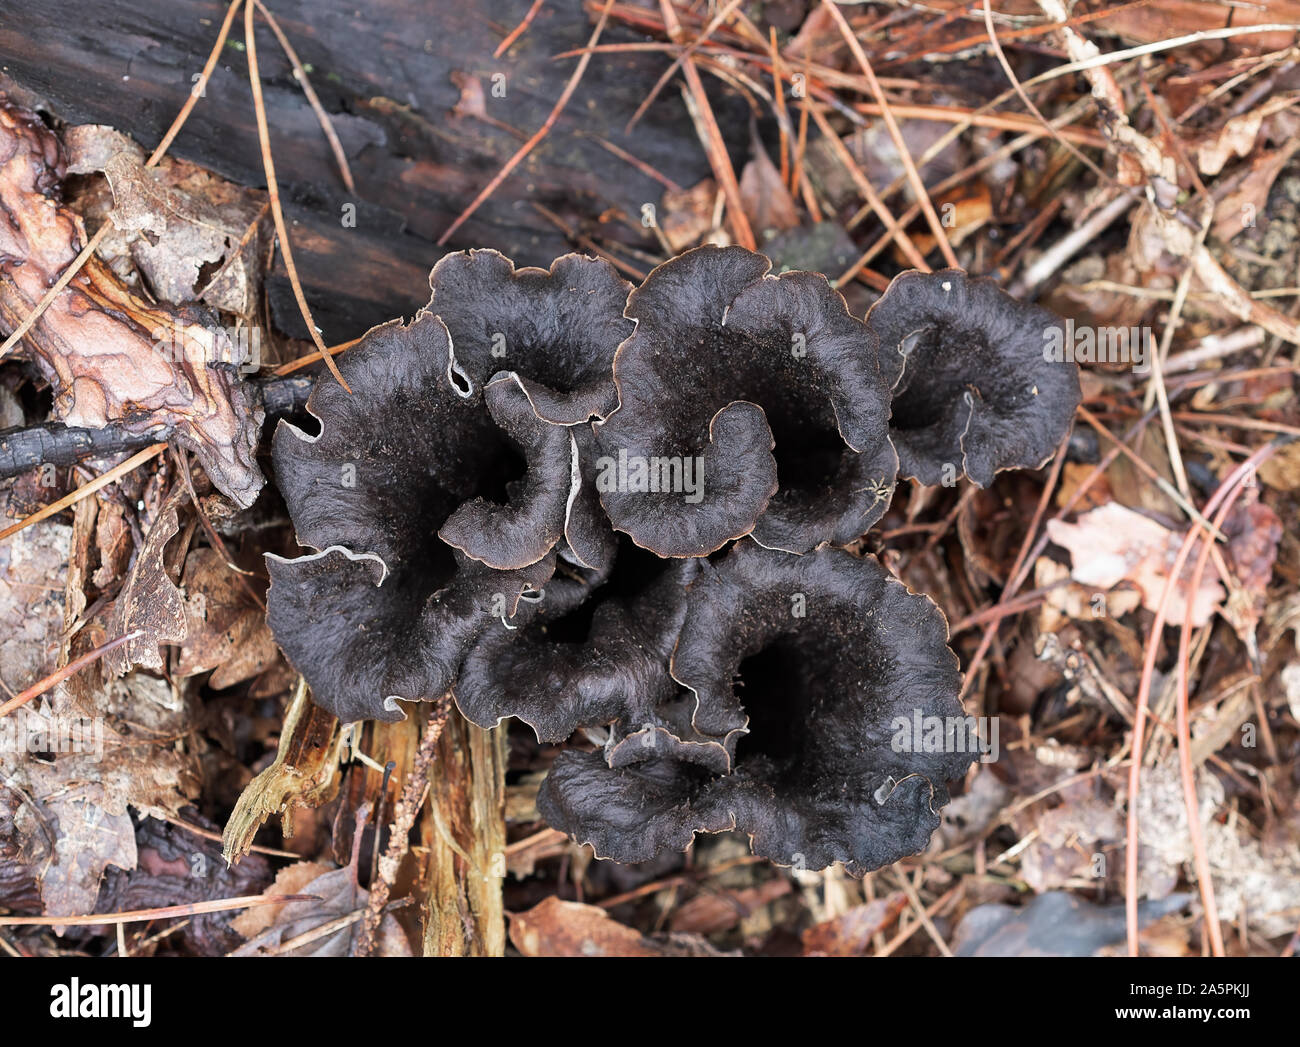 Craterellus cornucopioides edible mushrooms plants growing in nature. Aka Horn of plenty, black chanterelle, black trumpet etc. Stock Photo